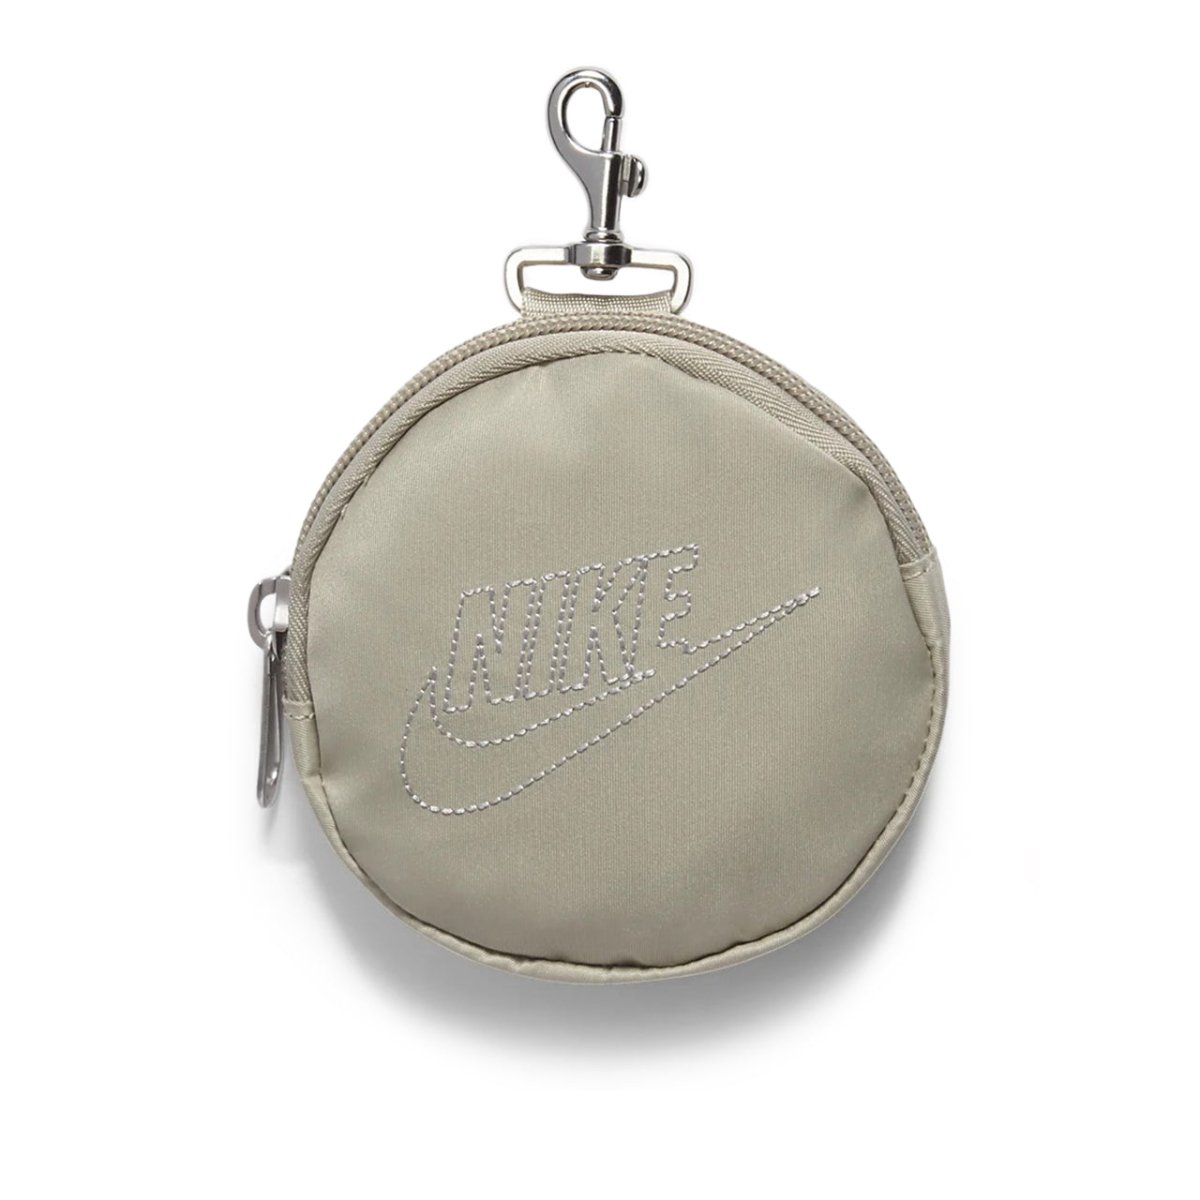 Nike WMNS Futura Luxe Tote Bag (Beige / Grau)  - Allike Store